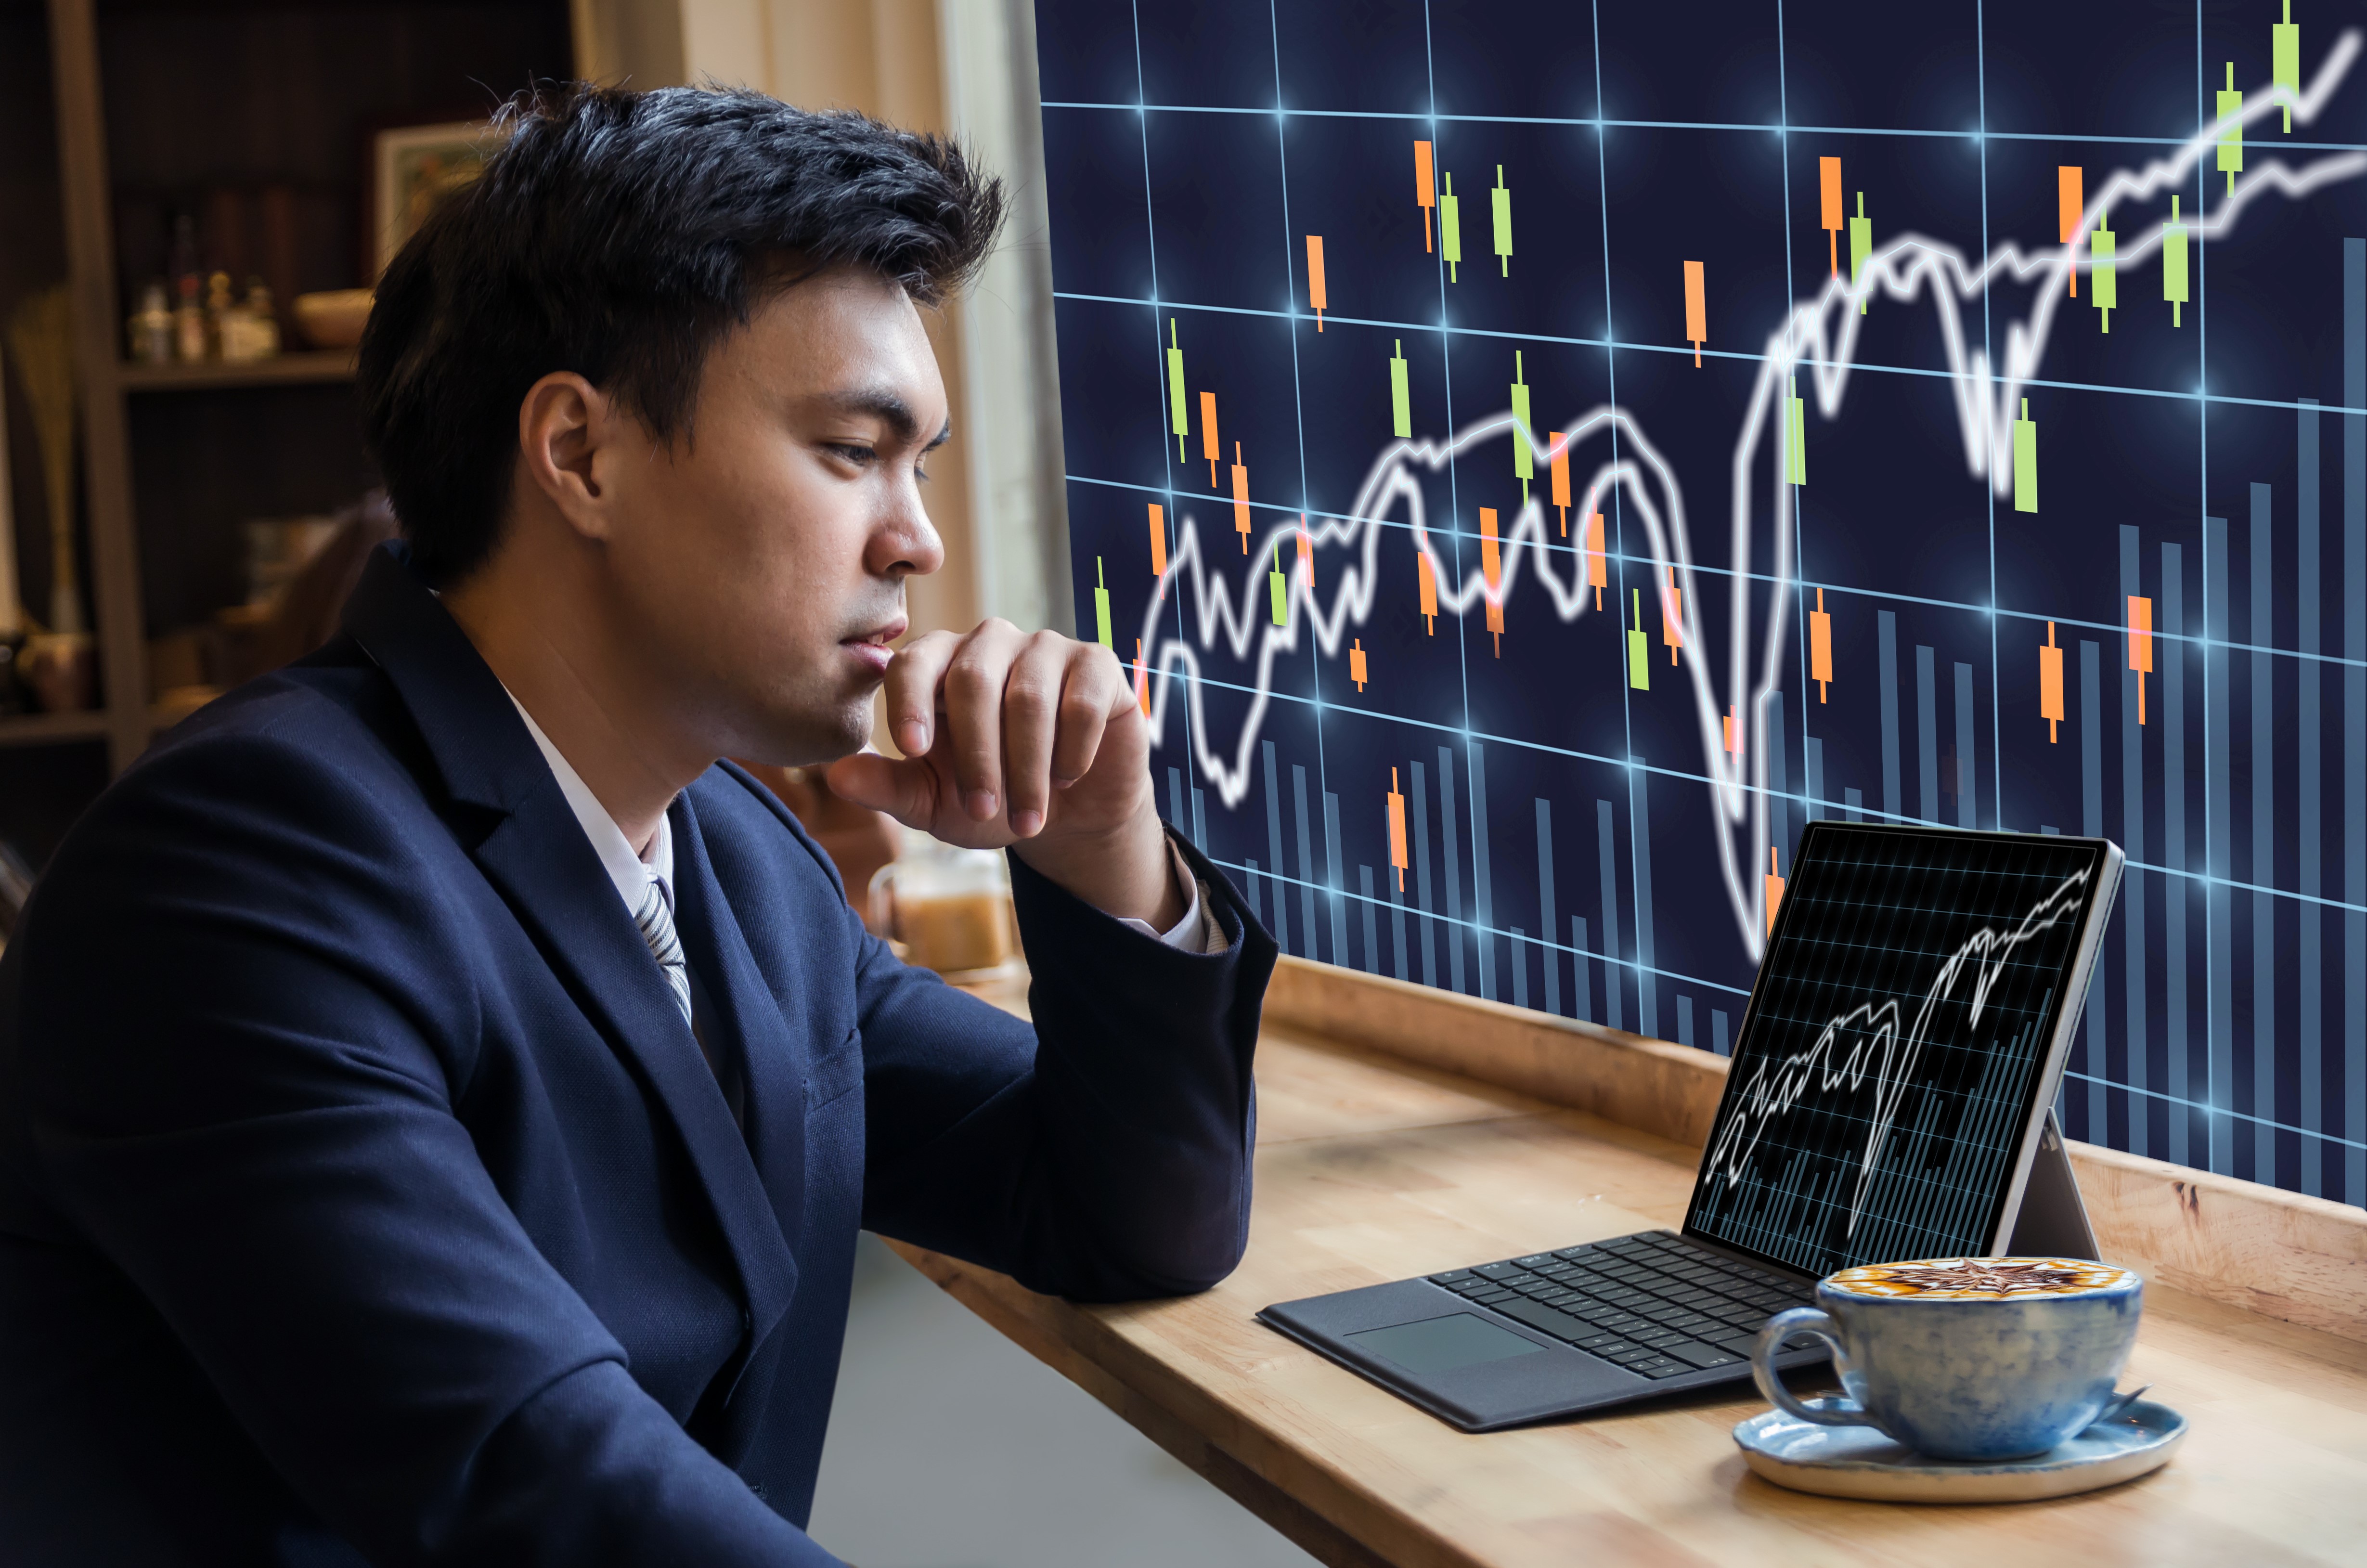 investor forex trading signals